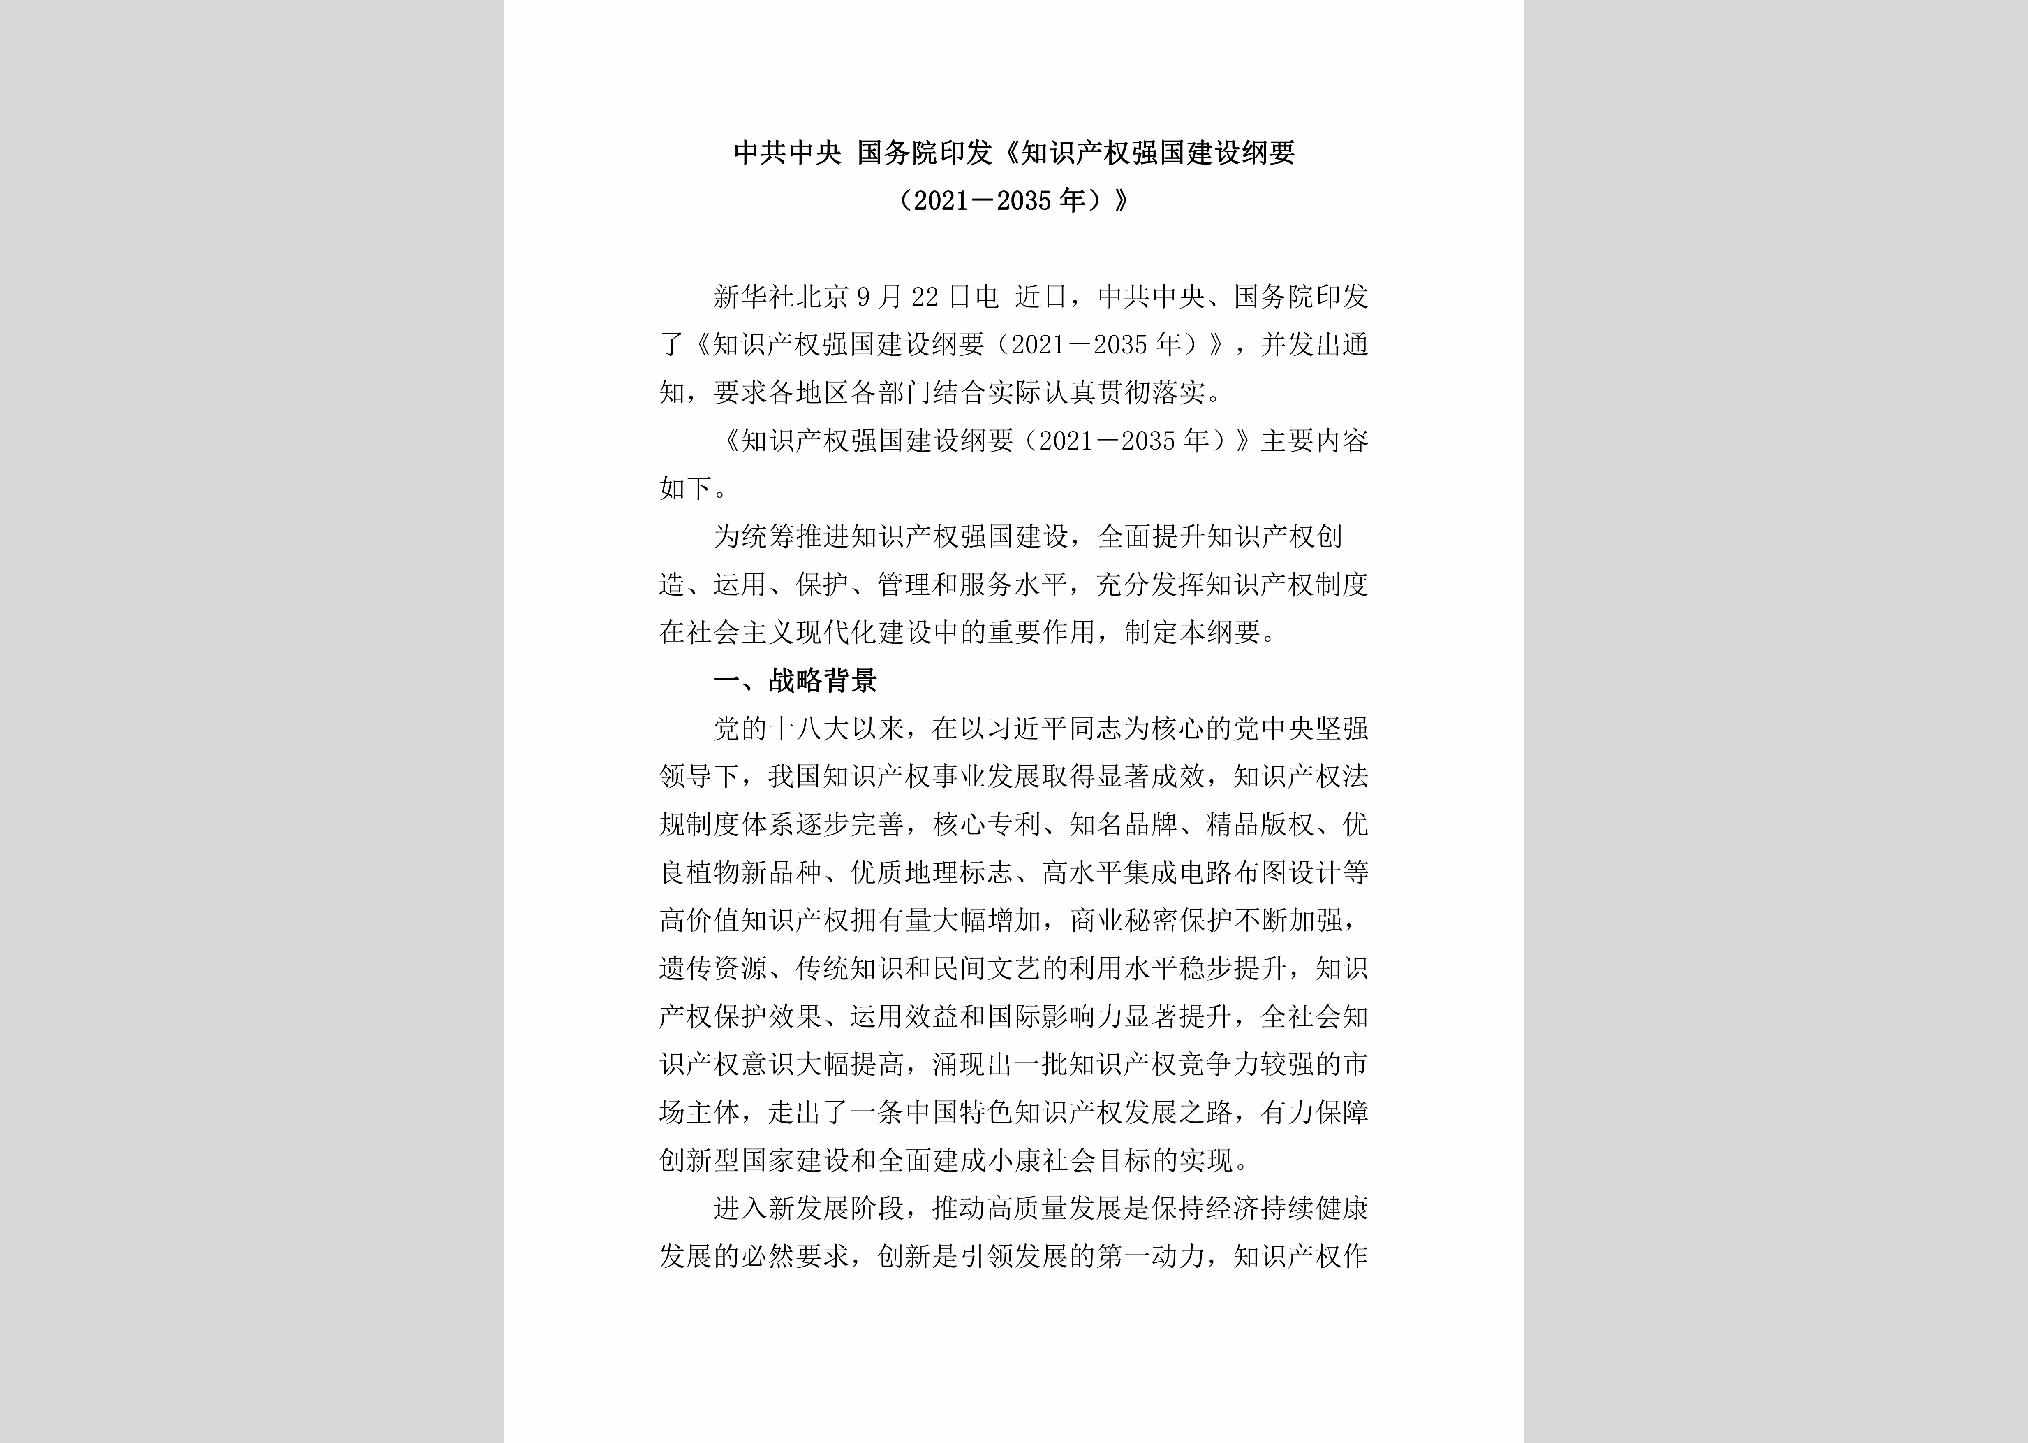 ZSCQQGJS：中共中央国务院印发《知识产权强国建设纲要（2021-2035年）》